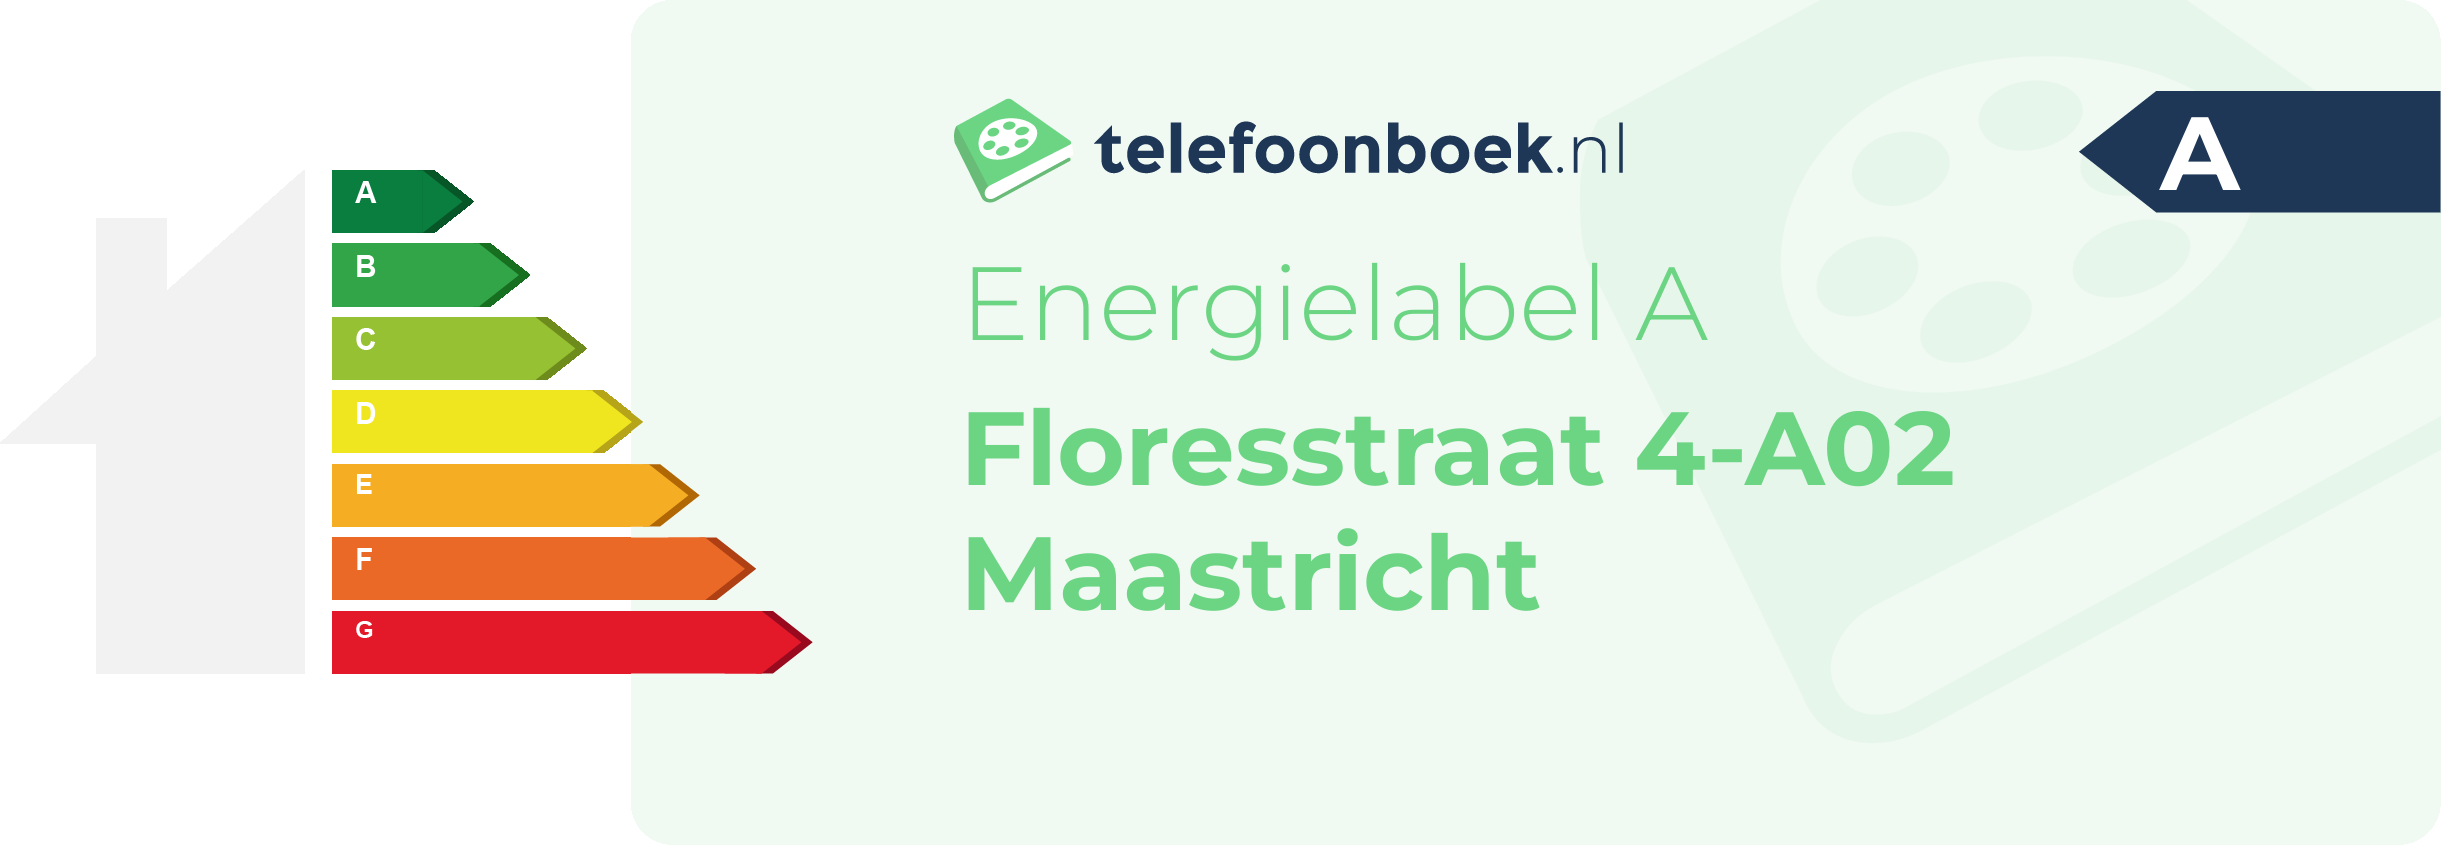 Energielabel Floresstraat 4-A02 Maastricht